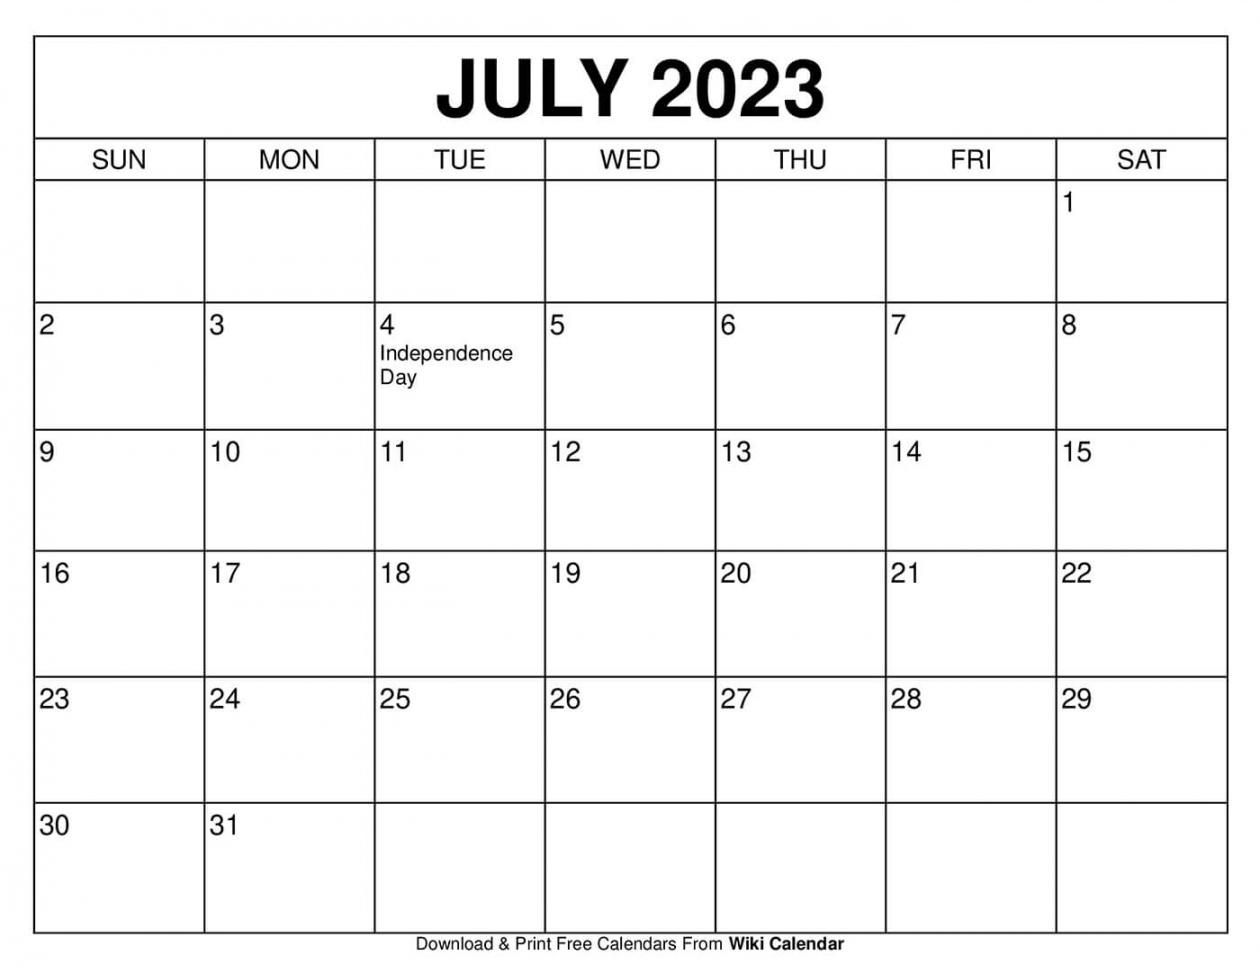 Free Printable July  Calendar Templates With Holidays - Wiki Calendar - FREE Printables - Free Printable July Calendar